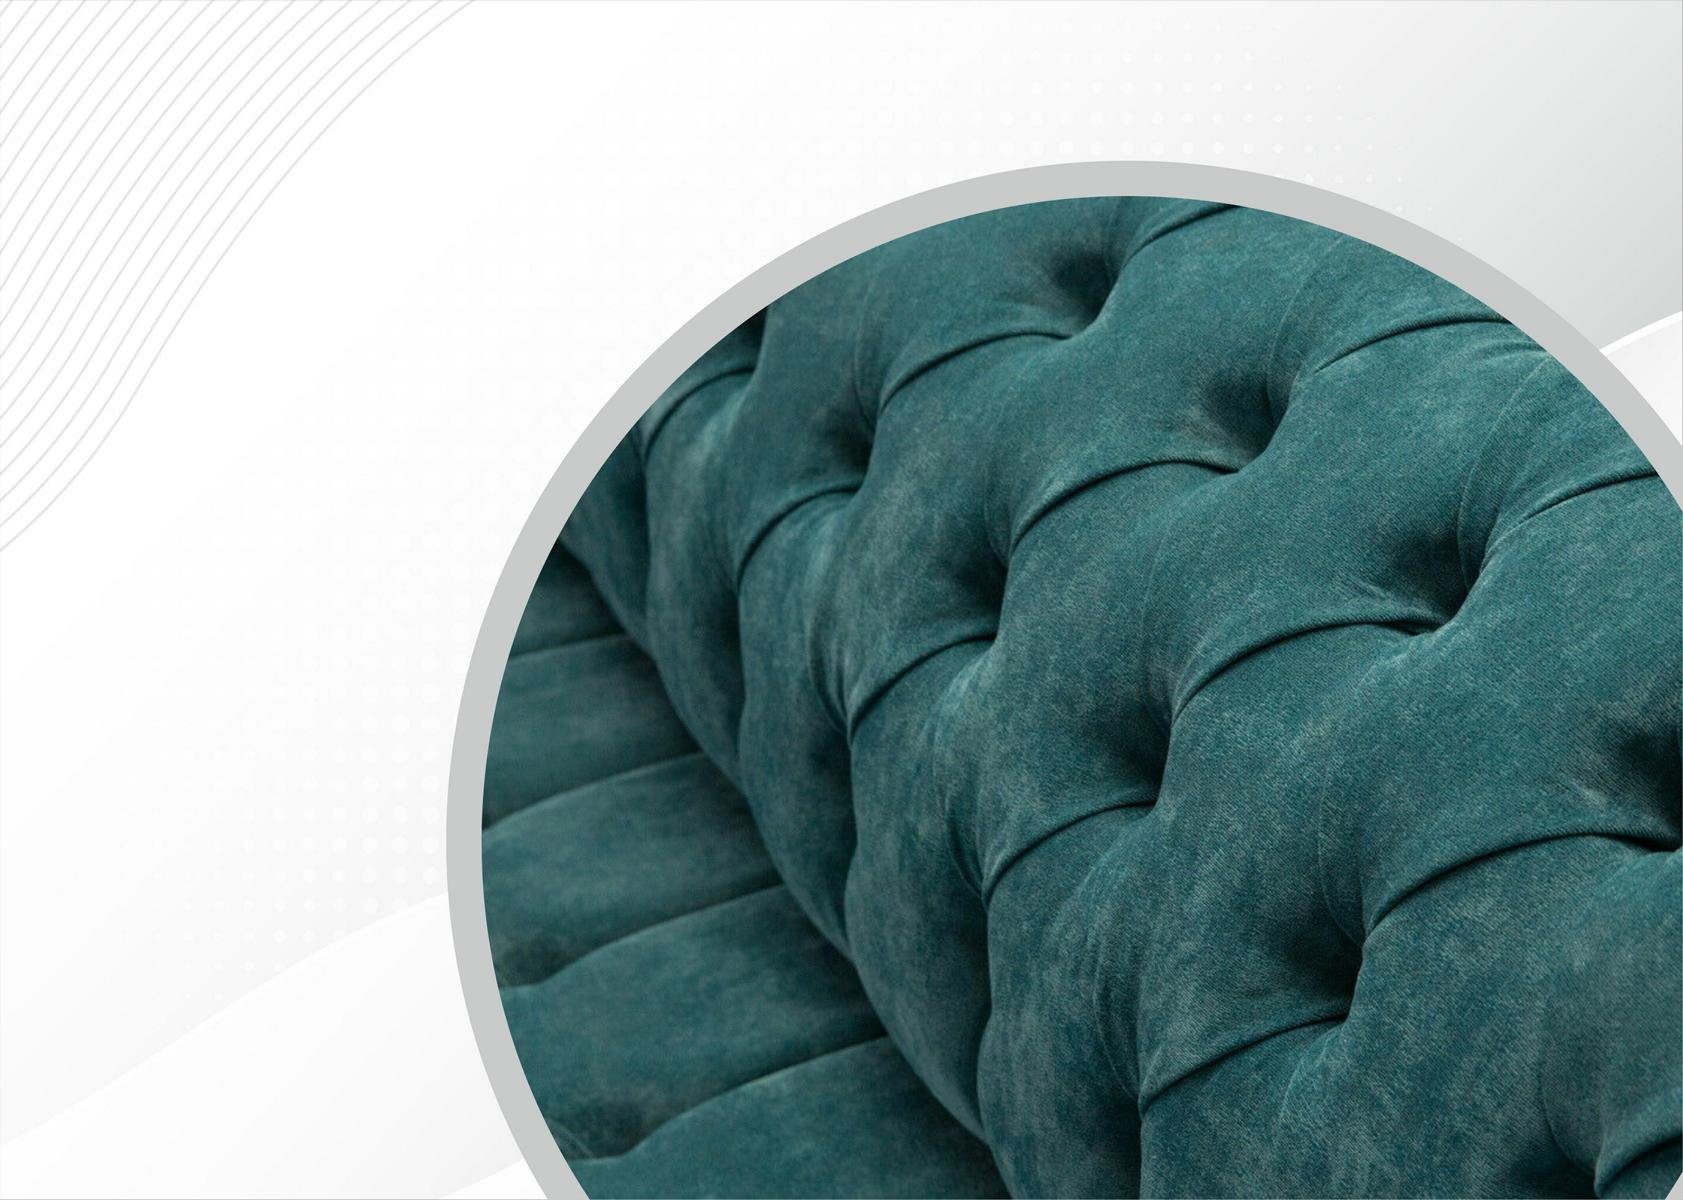 3 Sofa Europe Textil Sofas Couch in JVmoebel Sitzer, Chesterfield Made Turkis Klassischer Polster